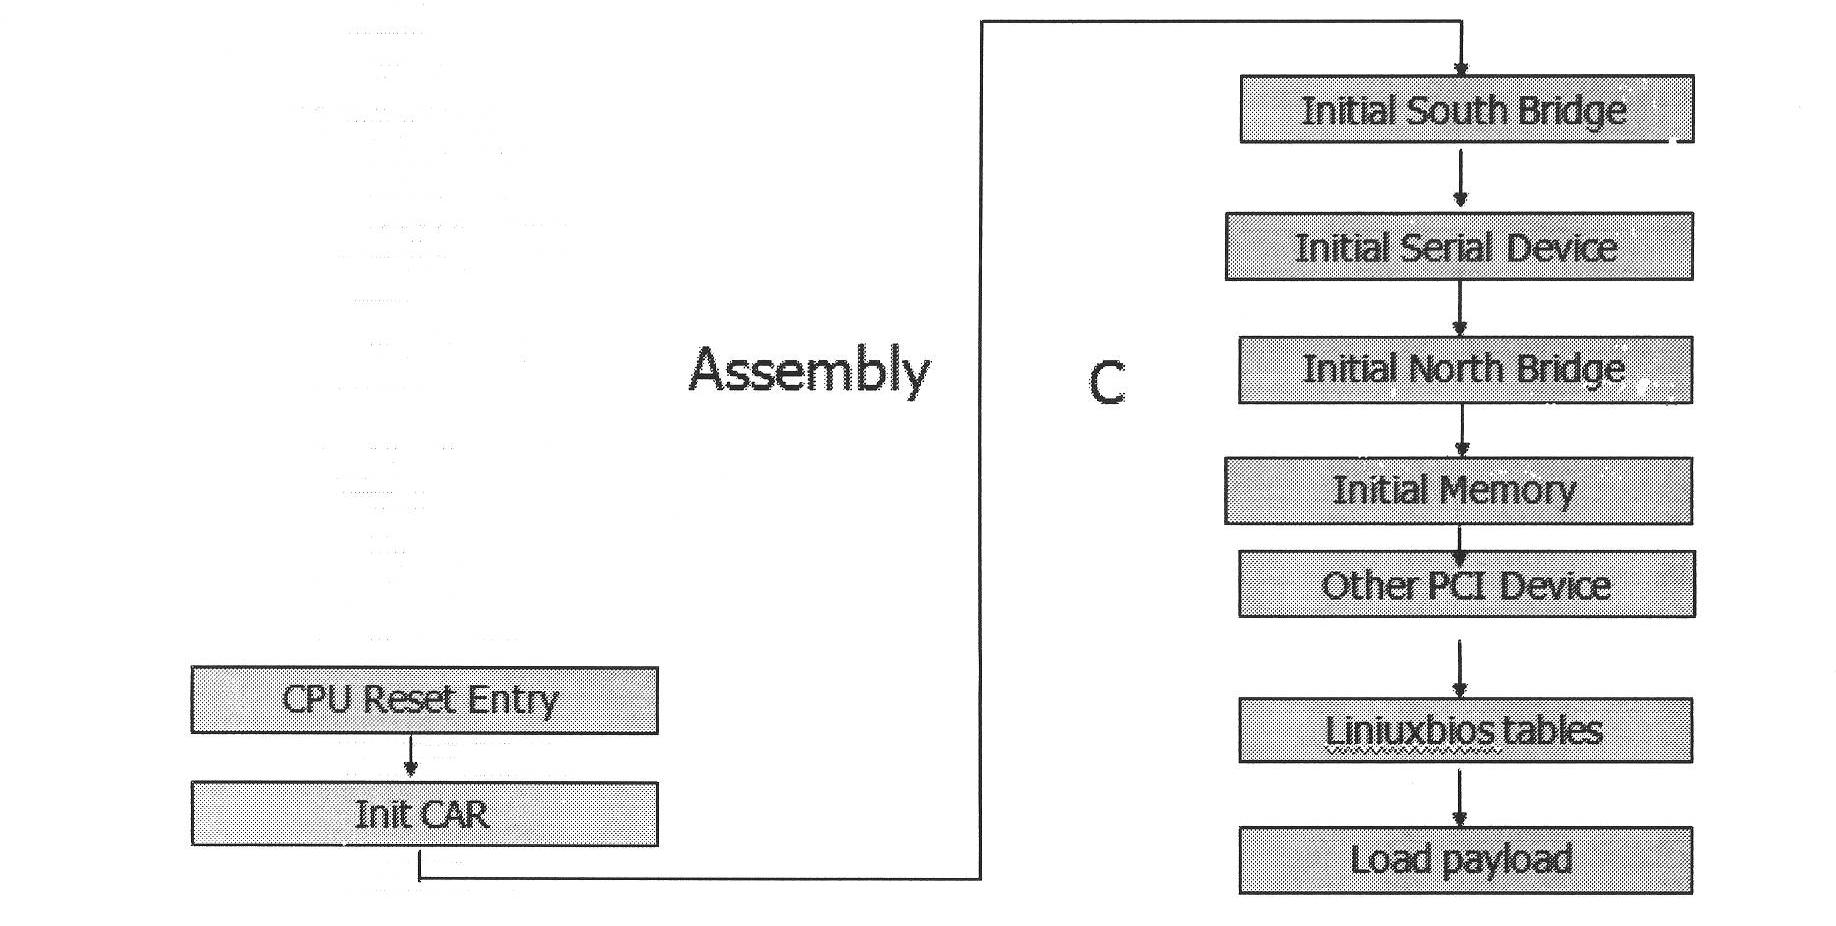 Basic input/output system (BIOS) for godson blade